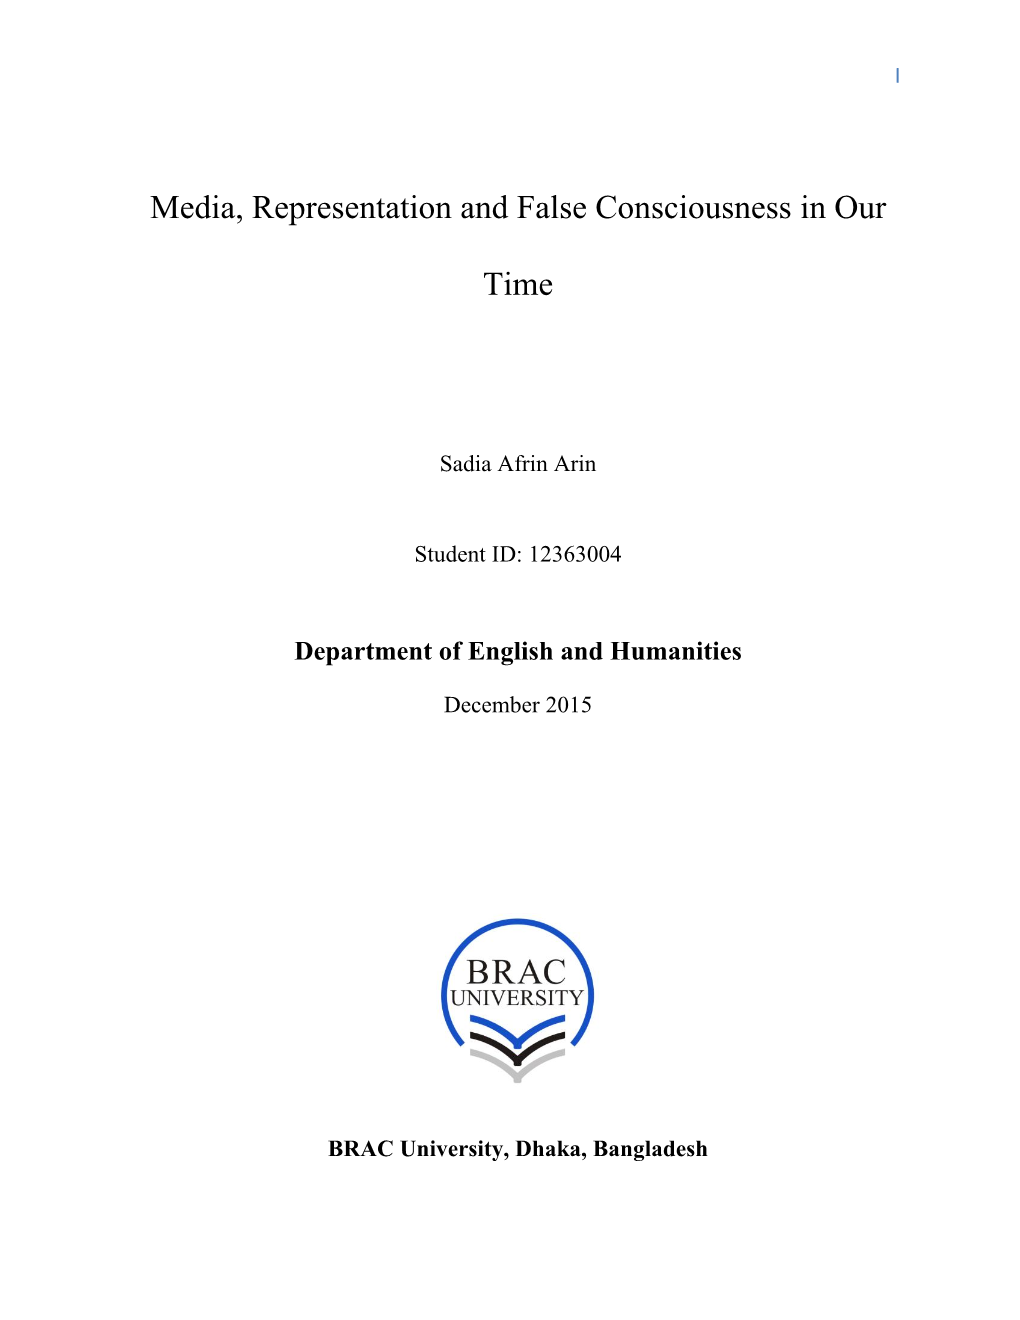 Media, Representation and False Consciousness in Our Time